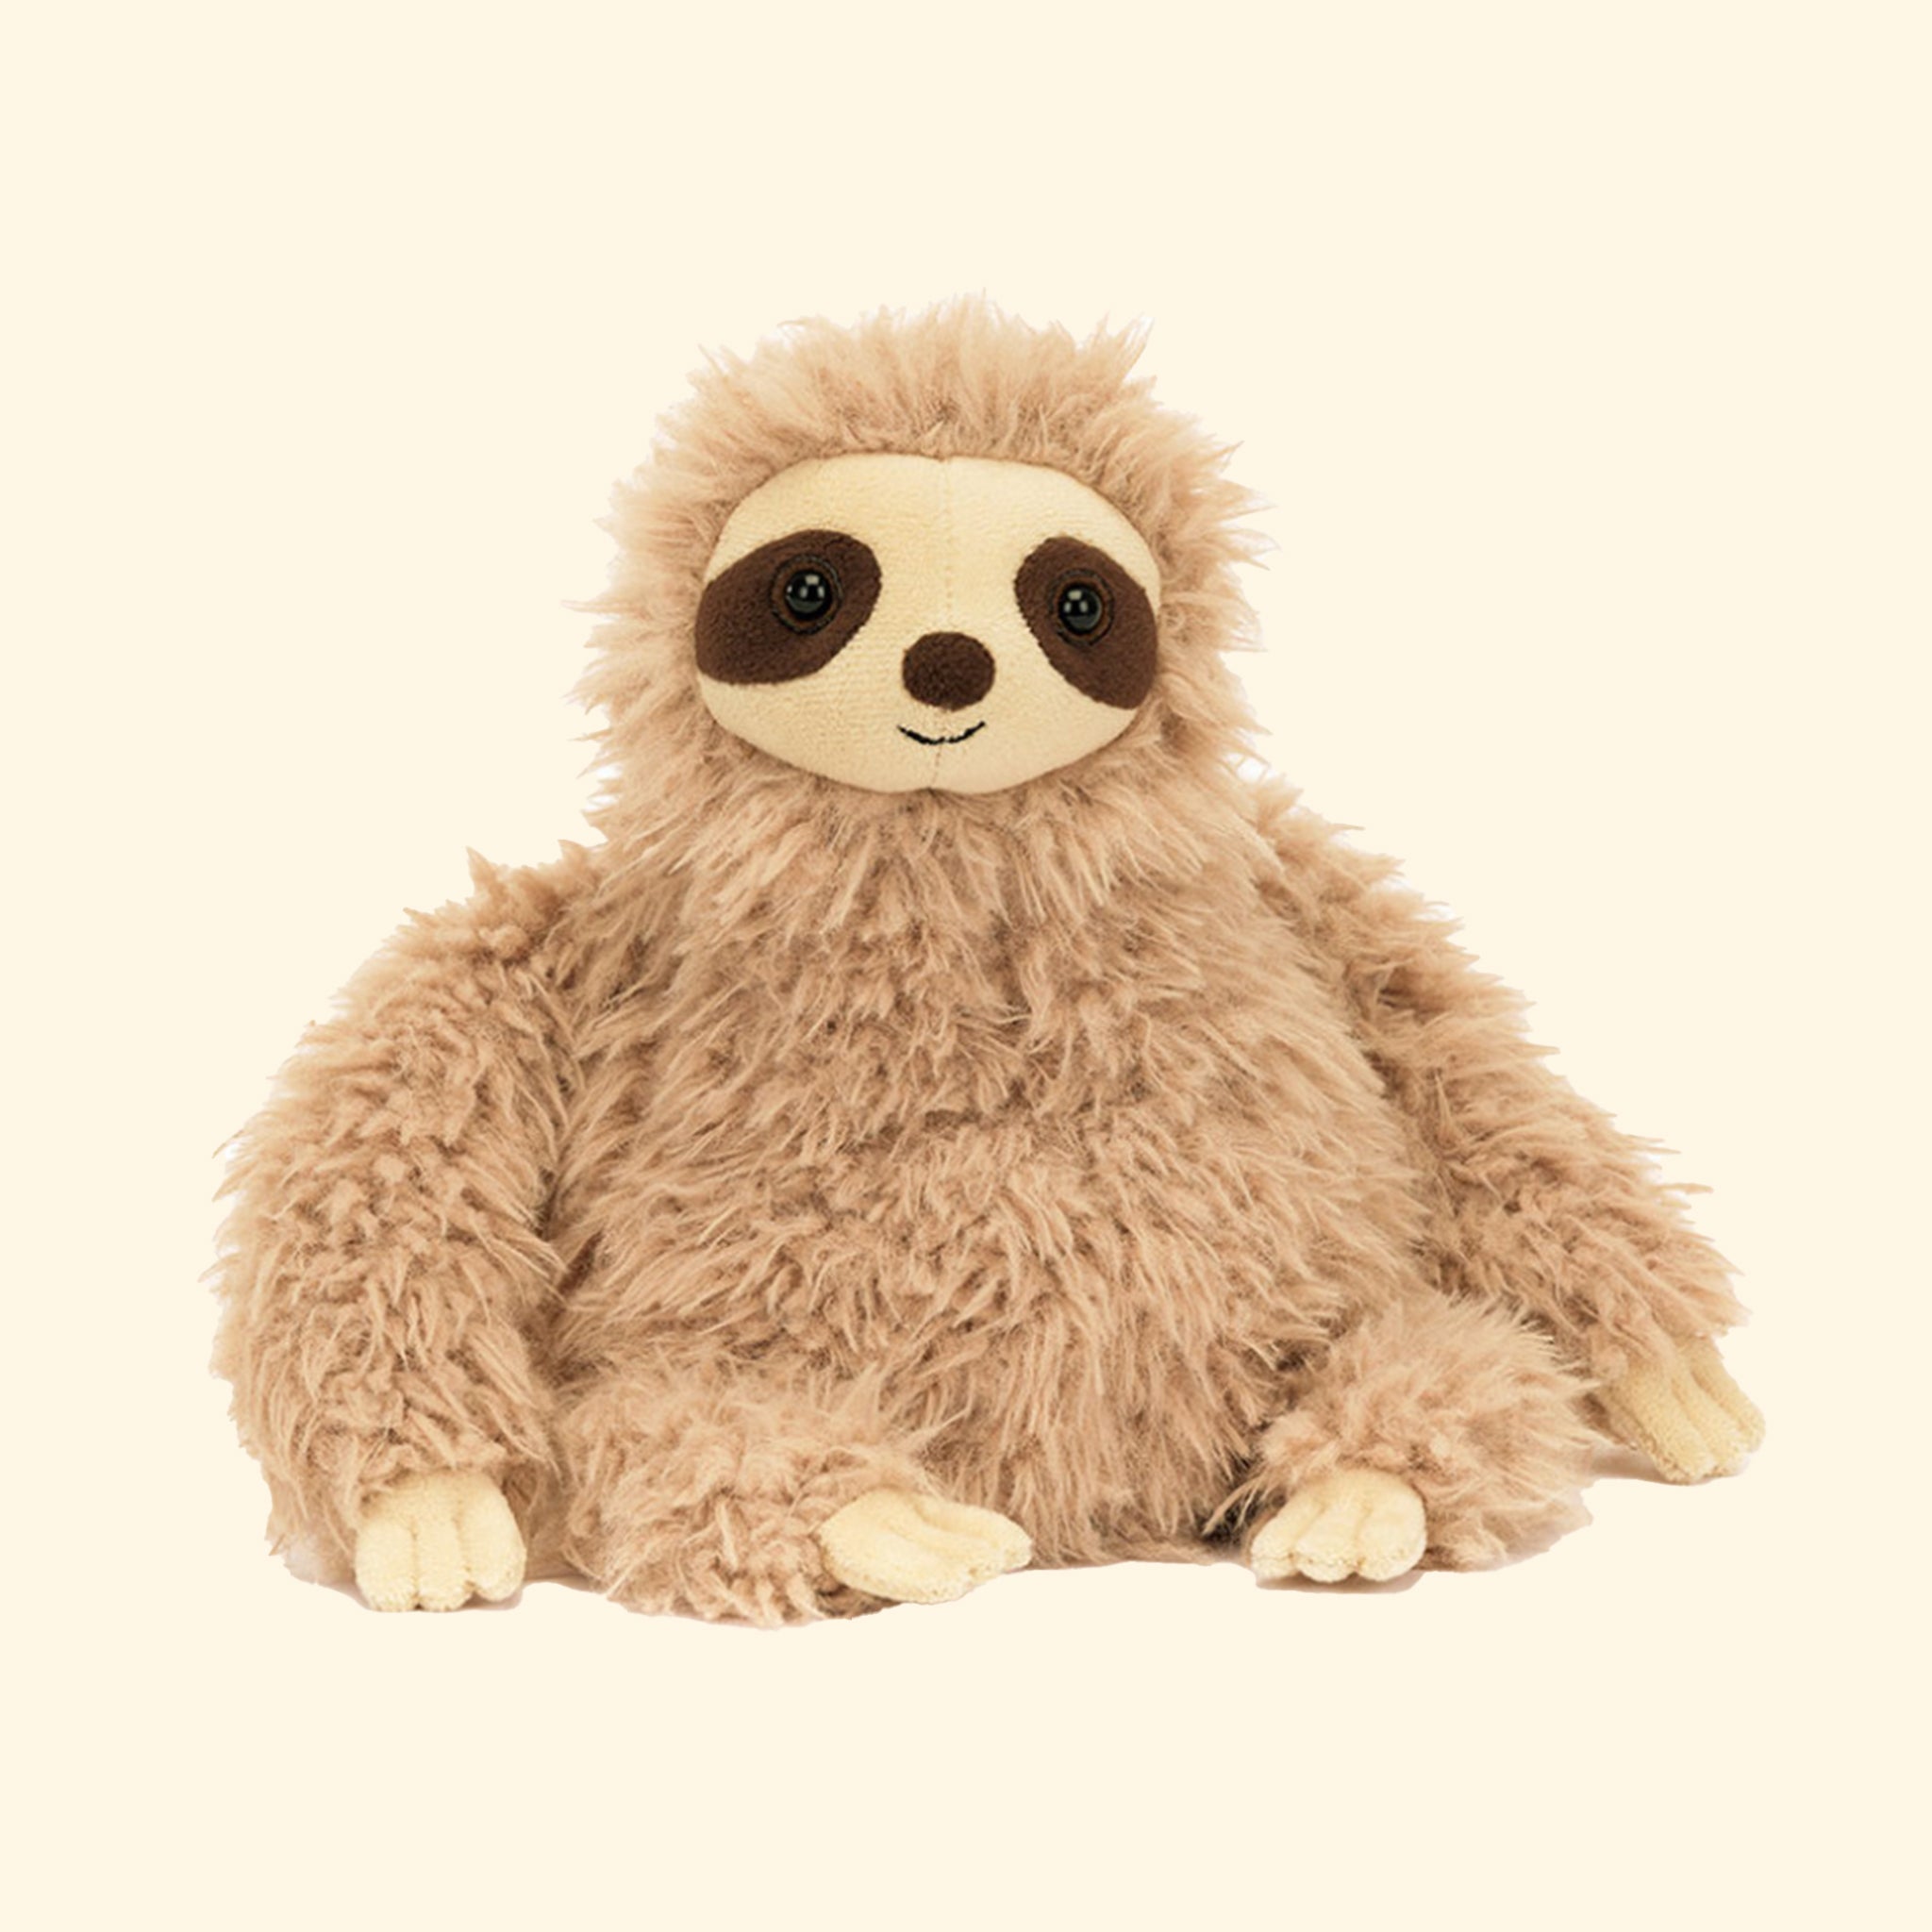 A neutral fuzzy sloth shaped stuffed animal toy. 